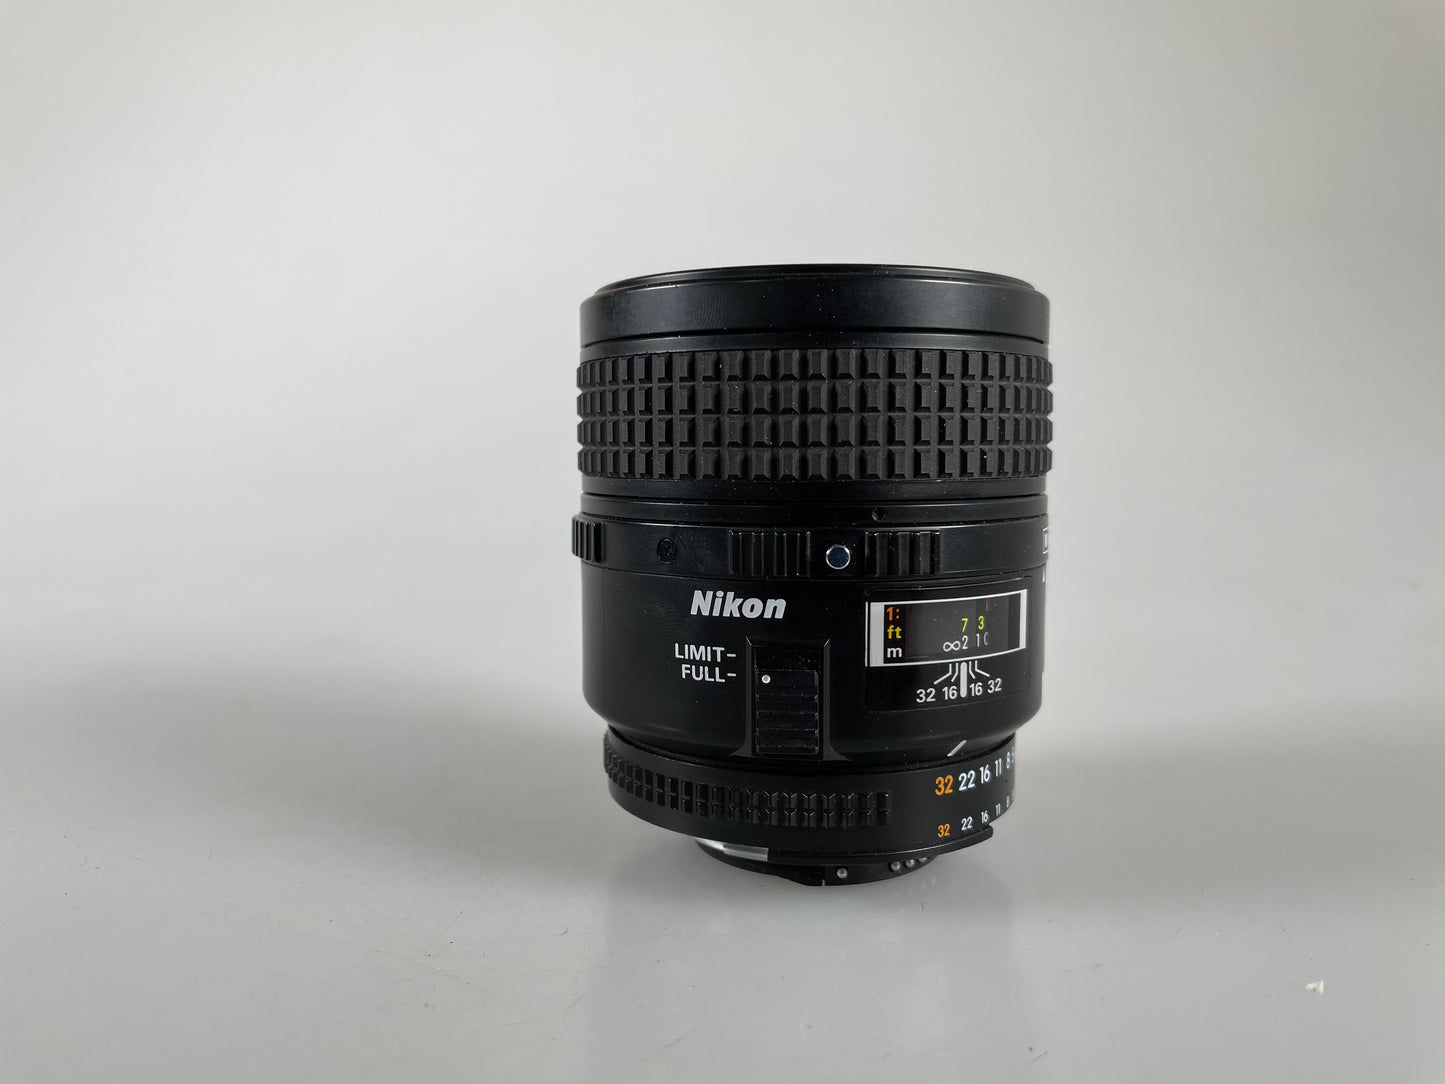 Nikon Nikkor AF 60mm f2.8 D micro macro lens